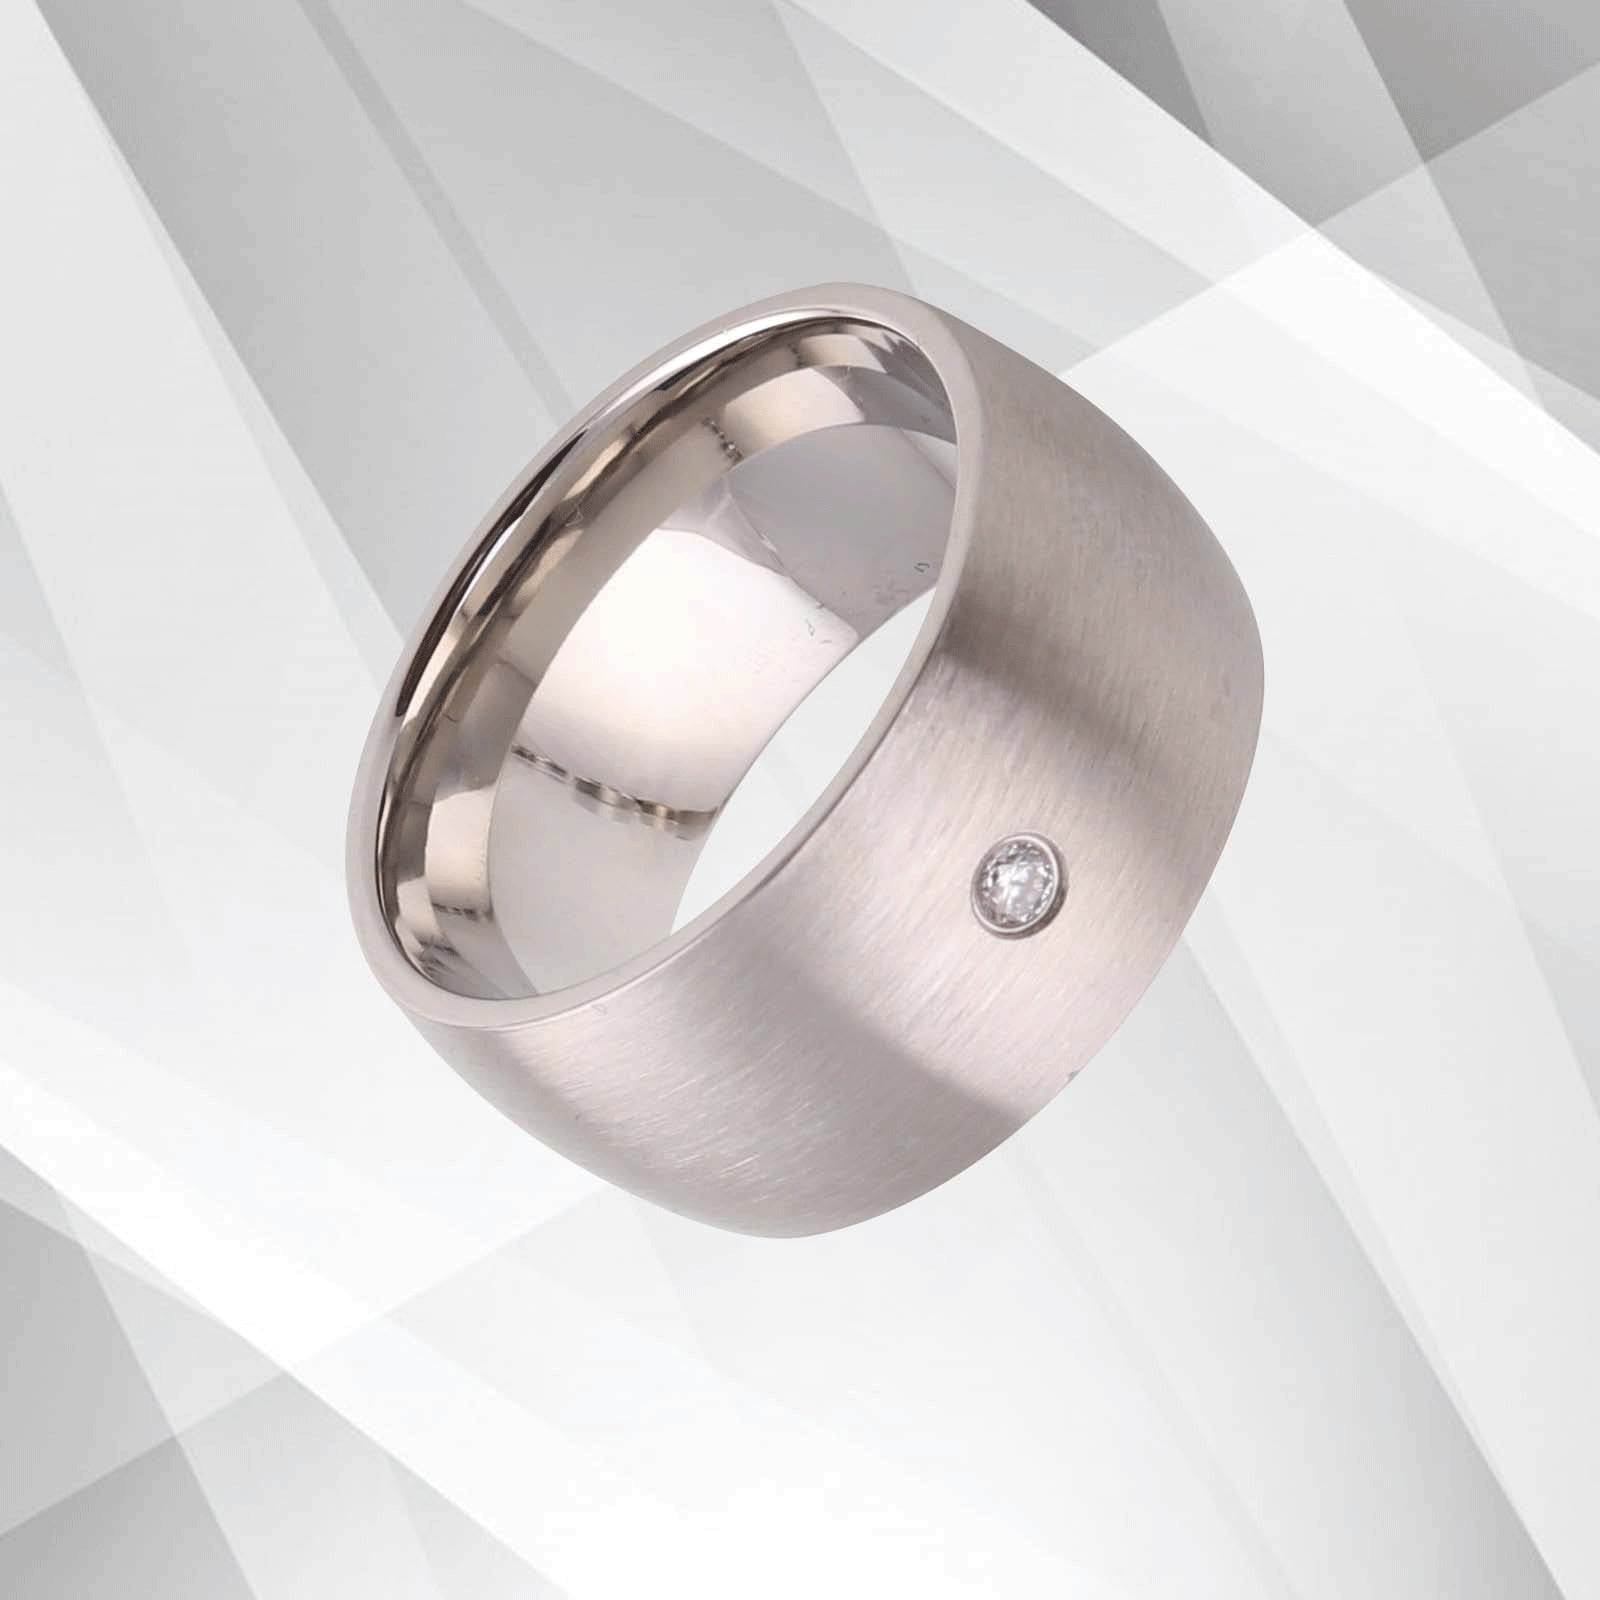 10mm Titanium CZ Diamond Wedding Band Ring - 18Ct White Gold Finish, Comfort Fit, Women's Anniversary Gift (NDFM15A) Bijou Her